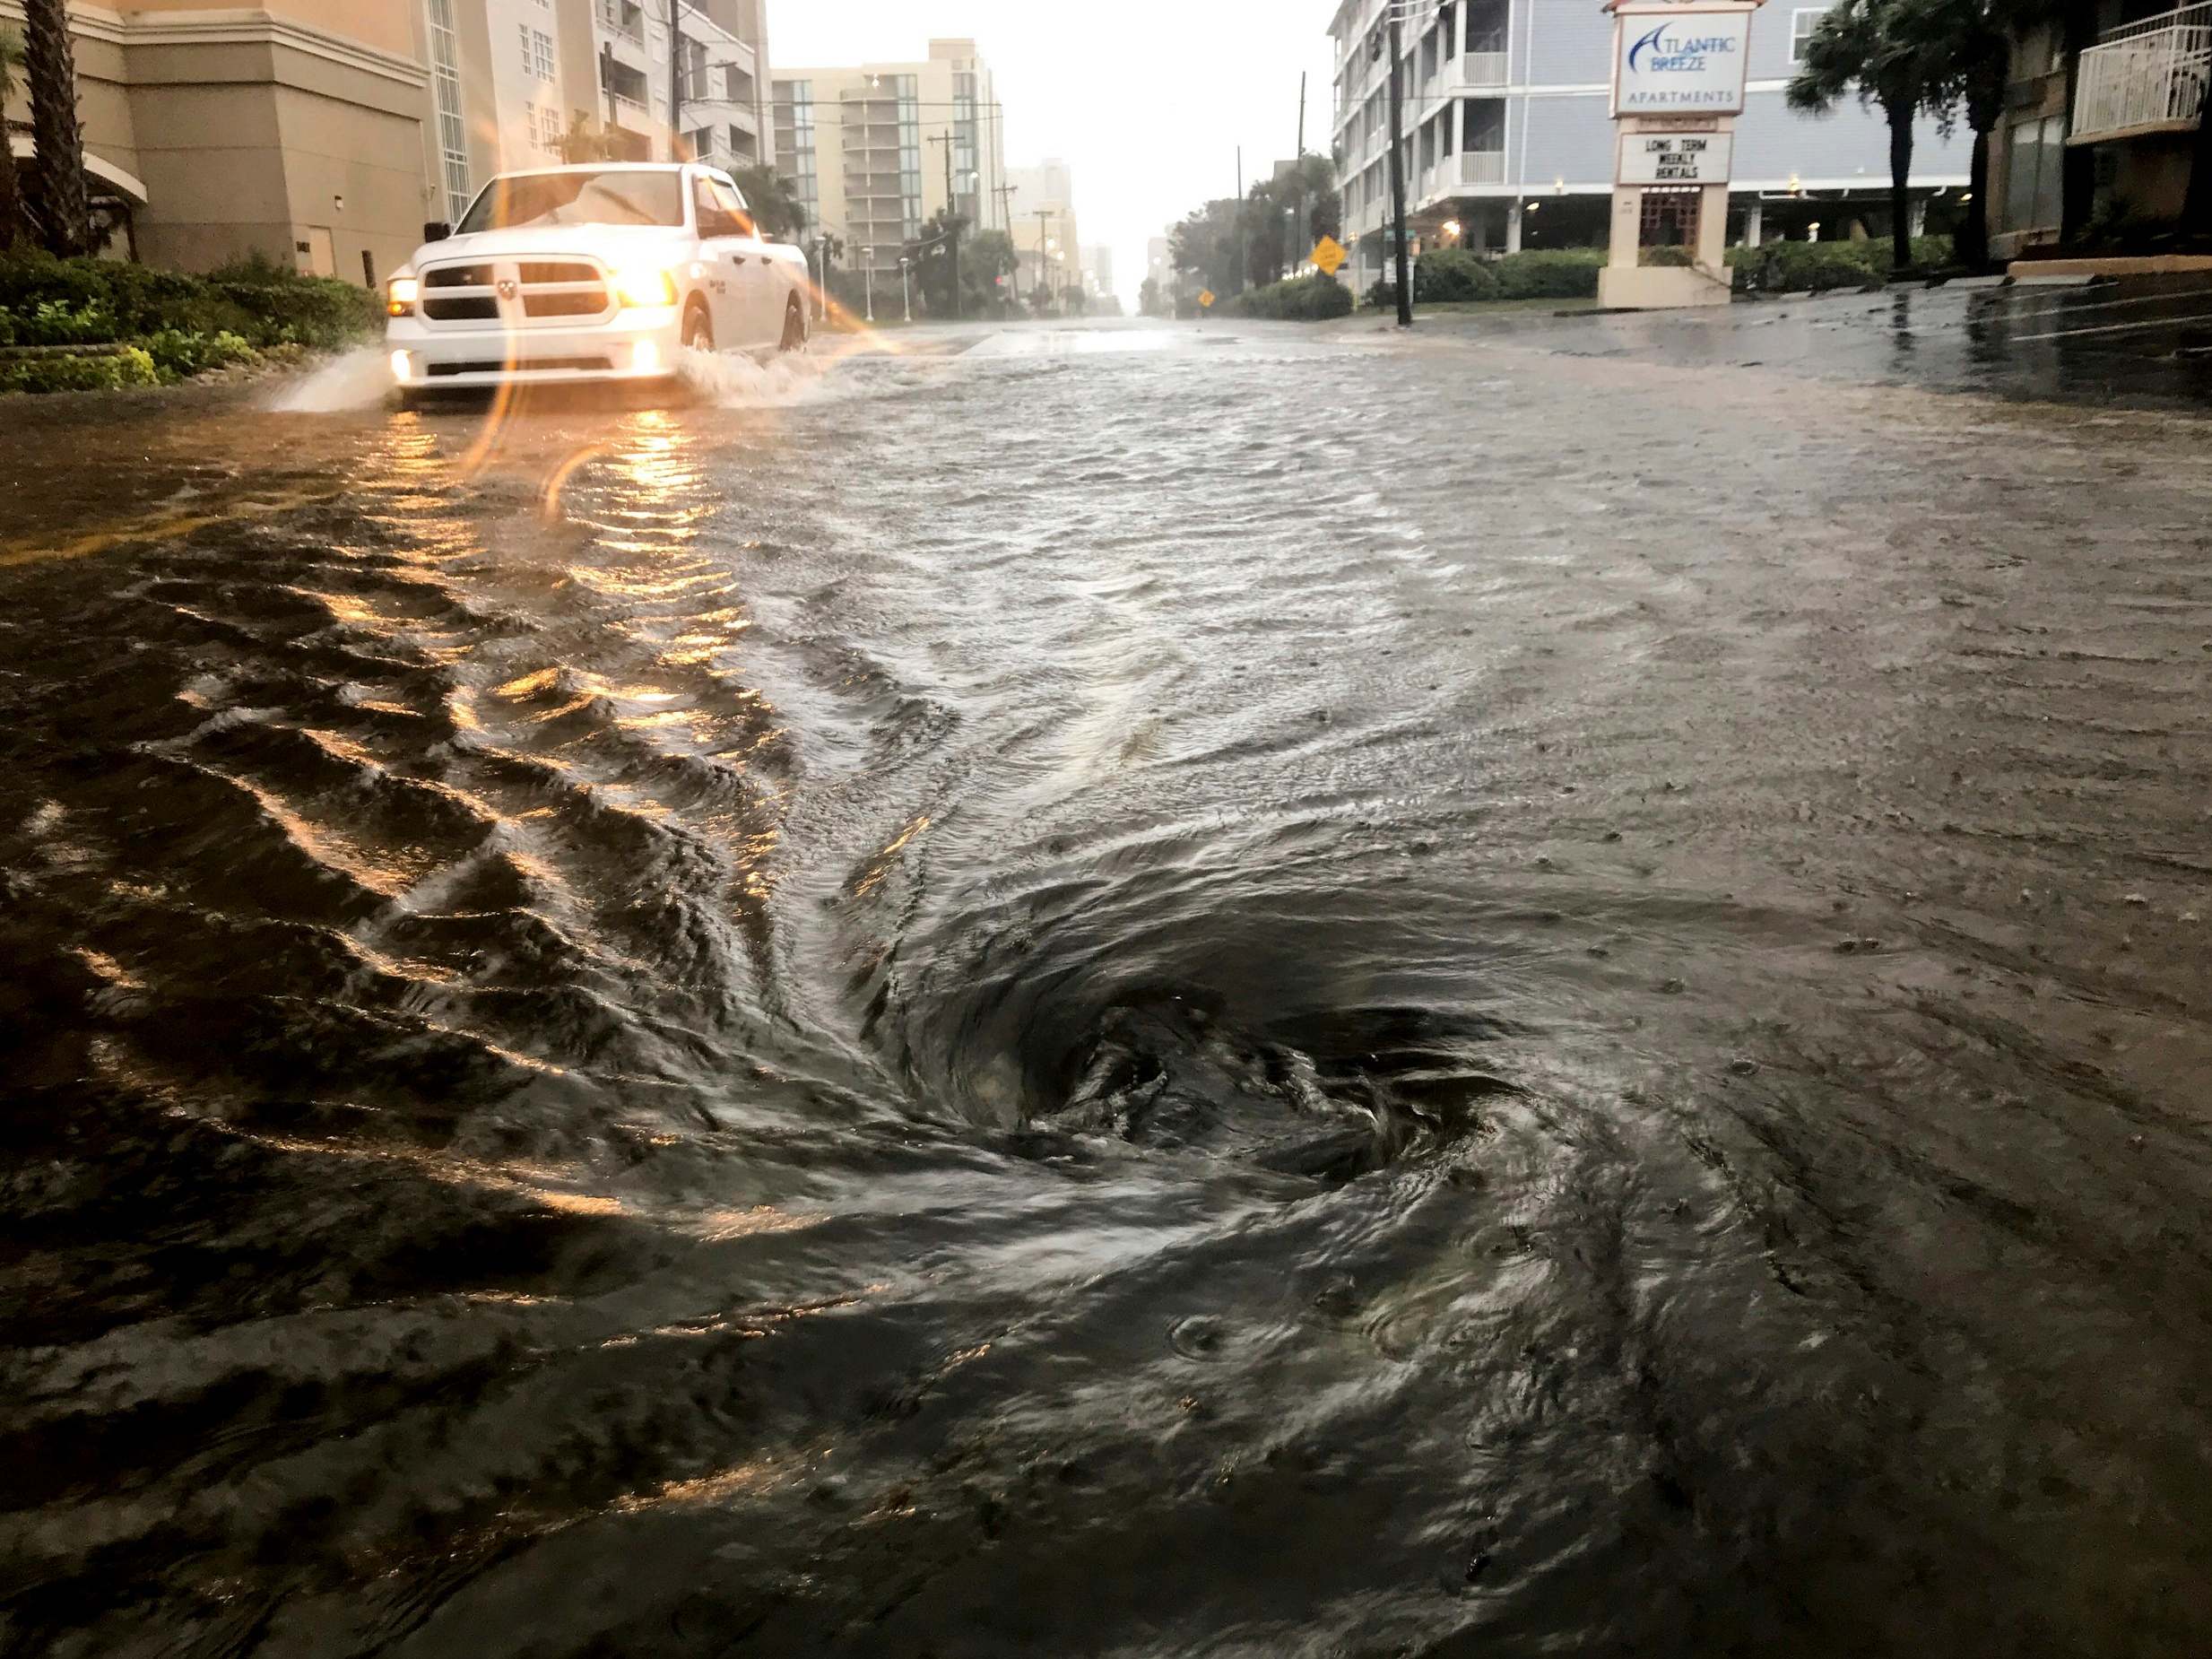 Floodwaters swirl around a storm drain